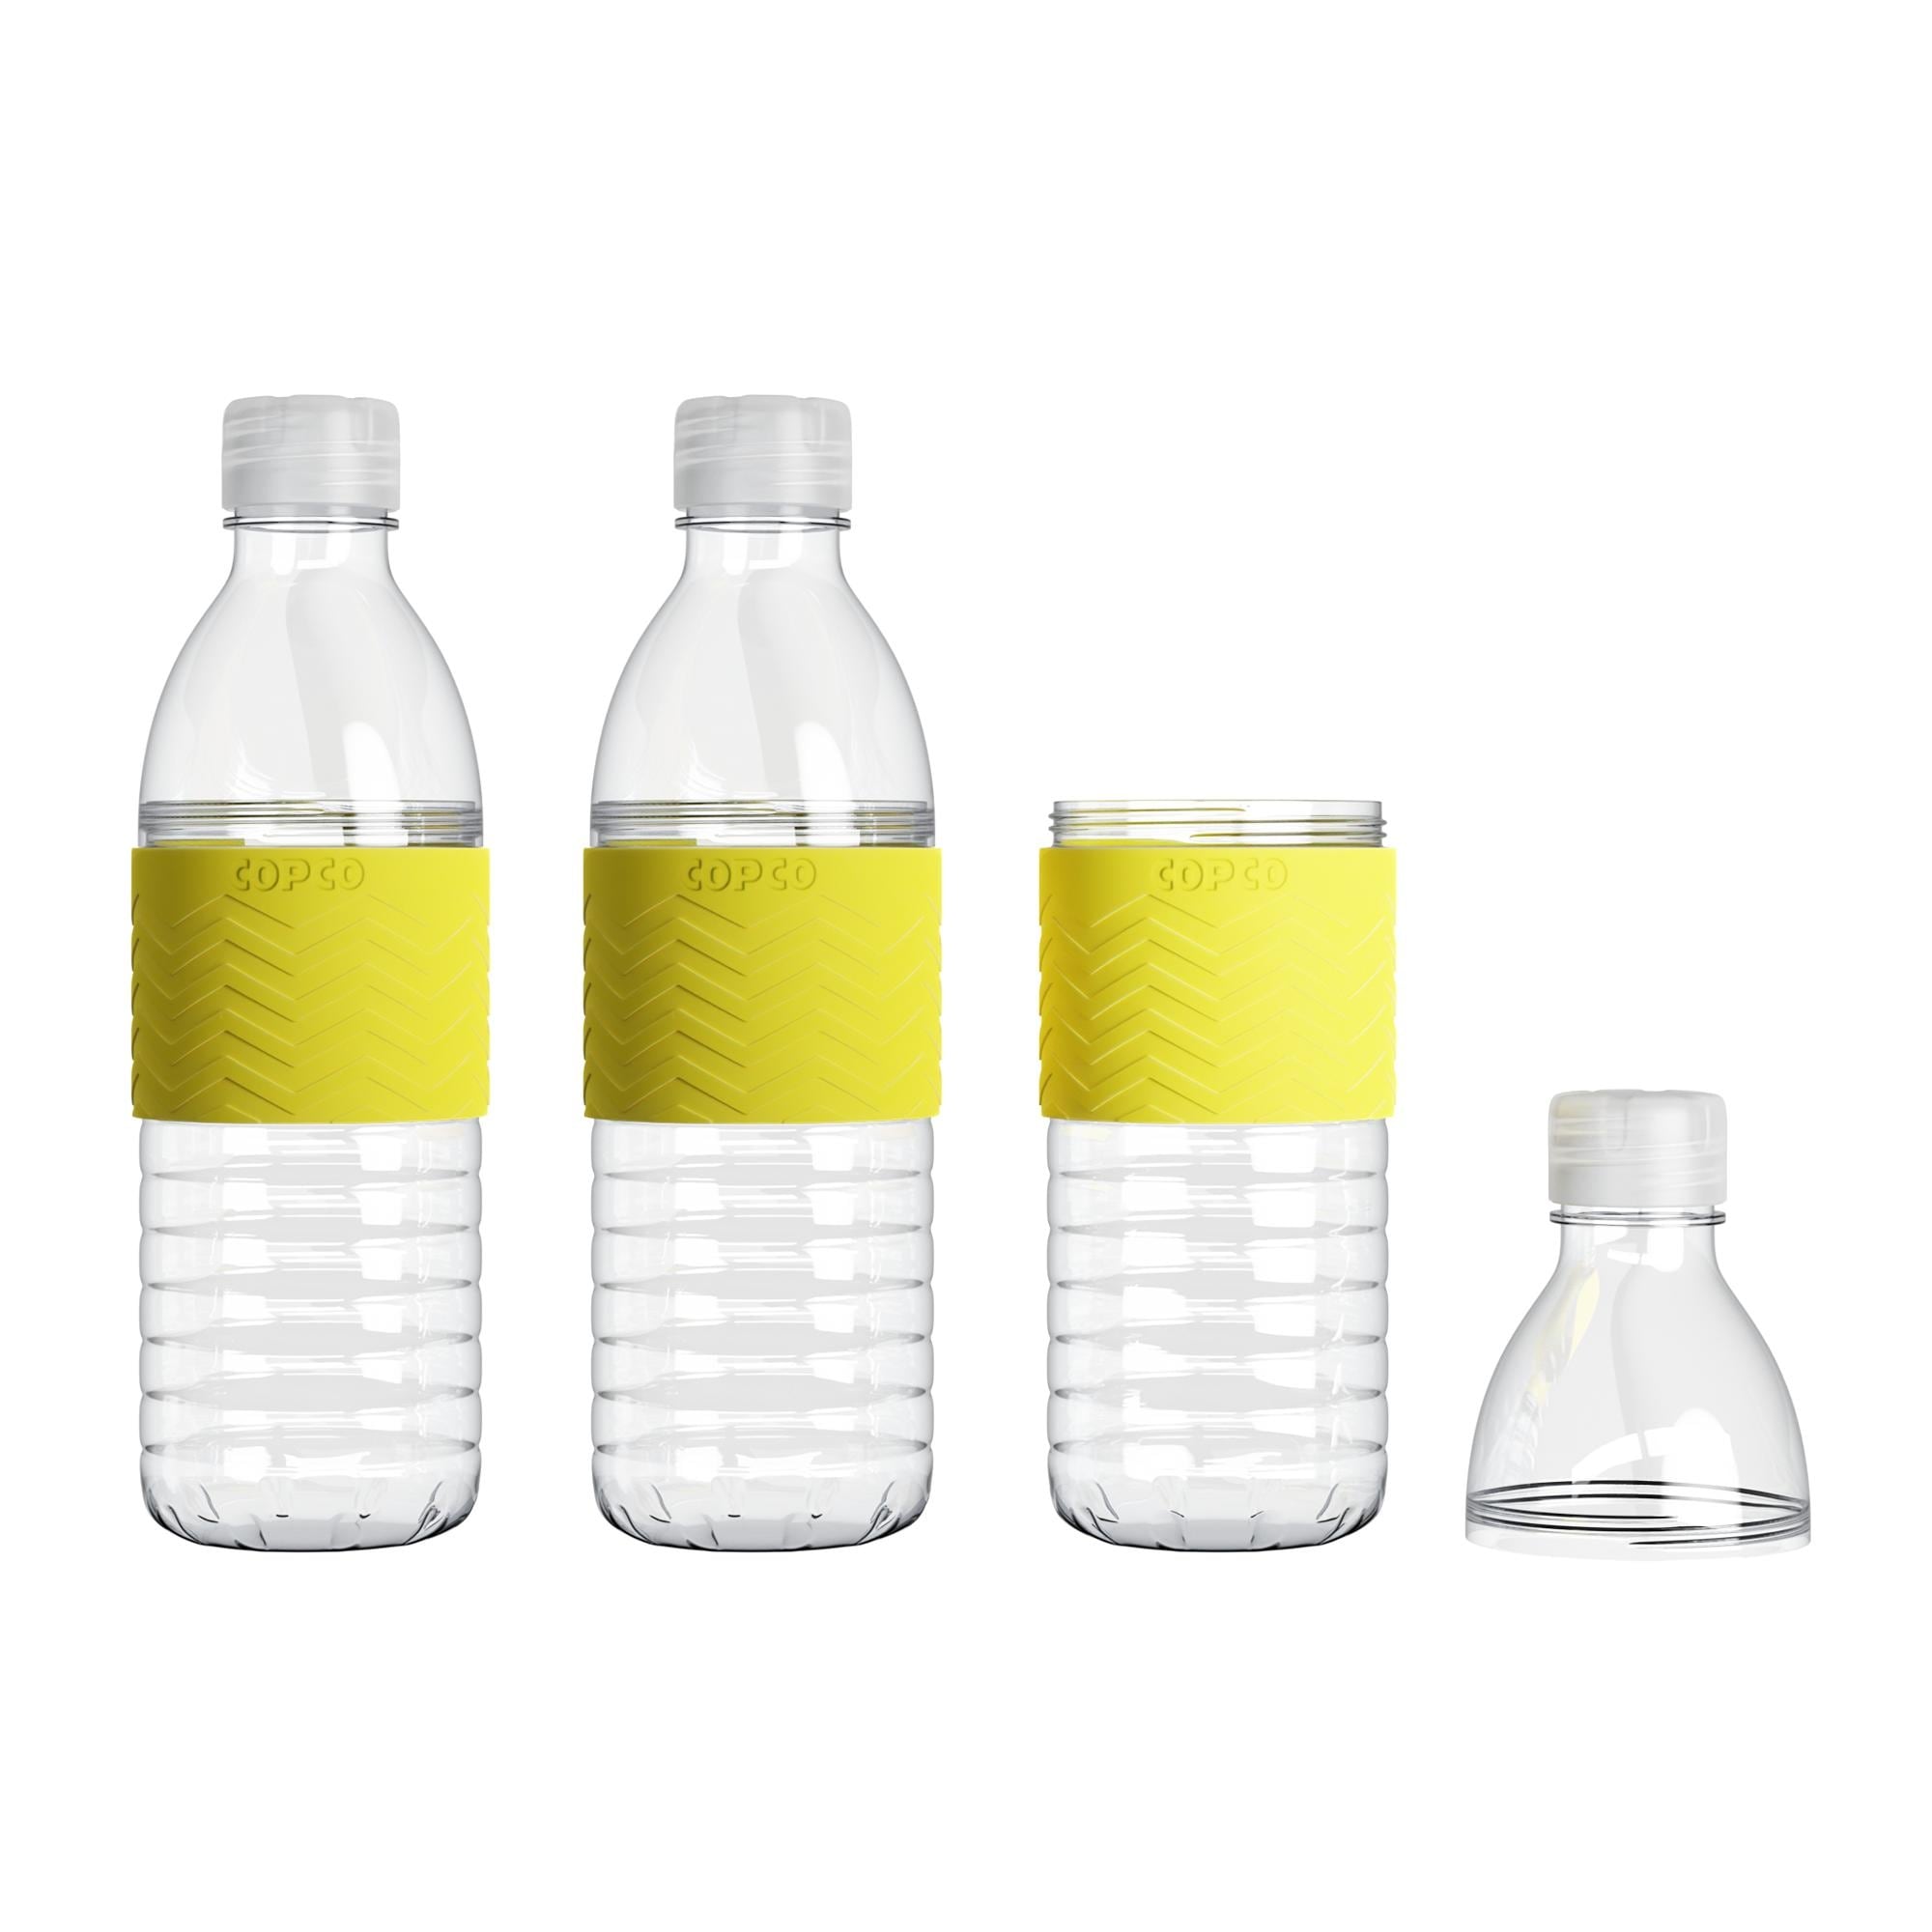 Copco Hydra Tritan Water Bottle 3 Pack - 16.9 oz - Bed Bath & Beyond -  38350084